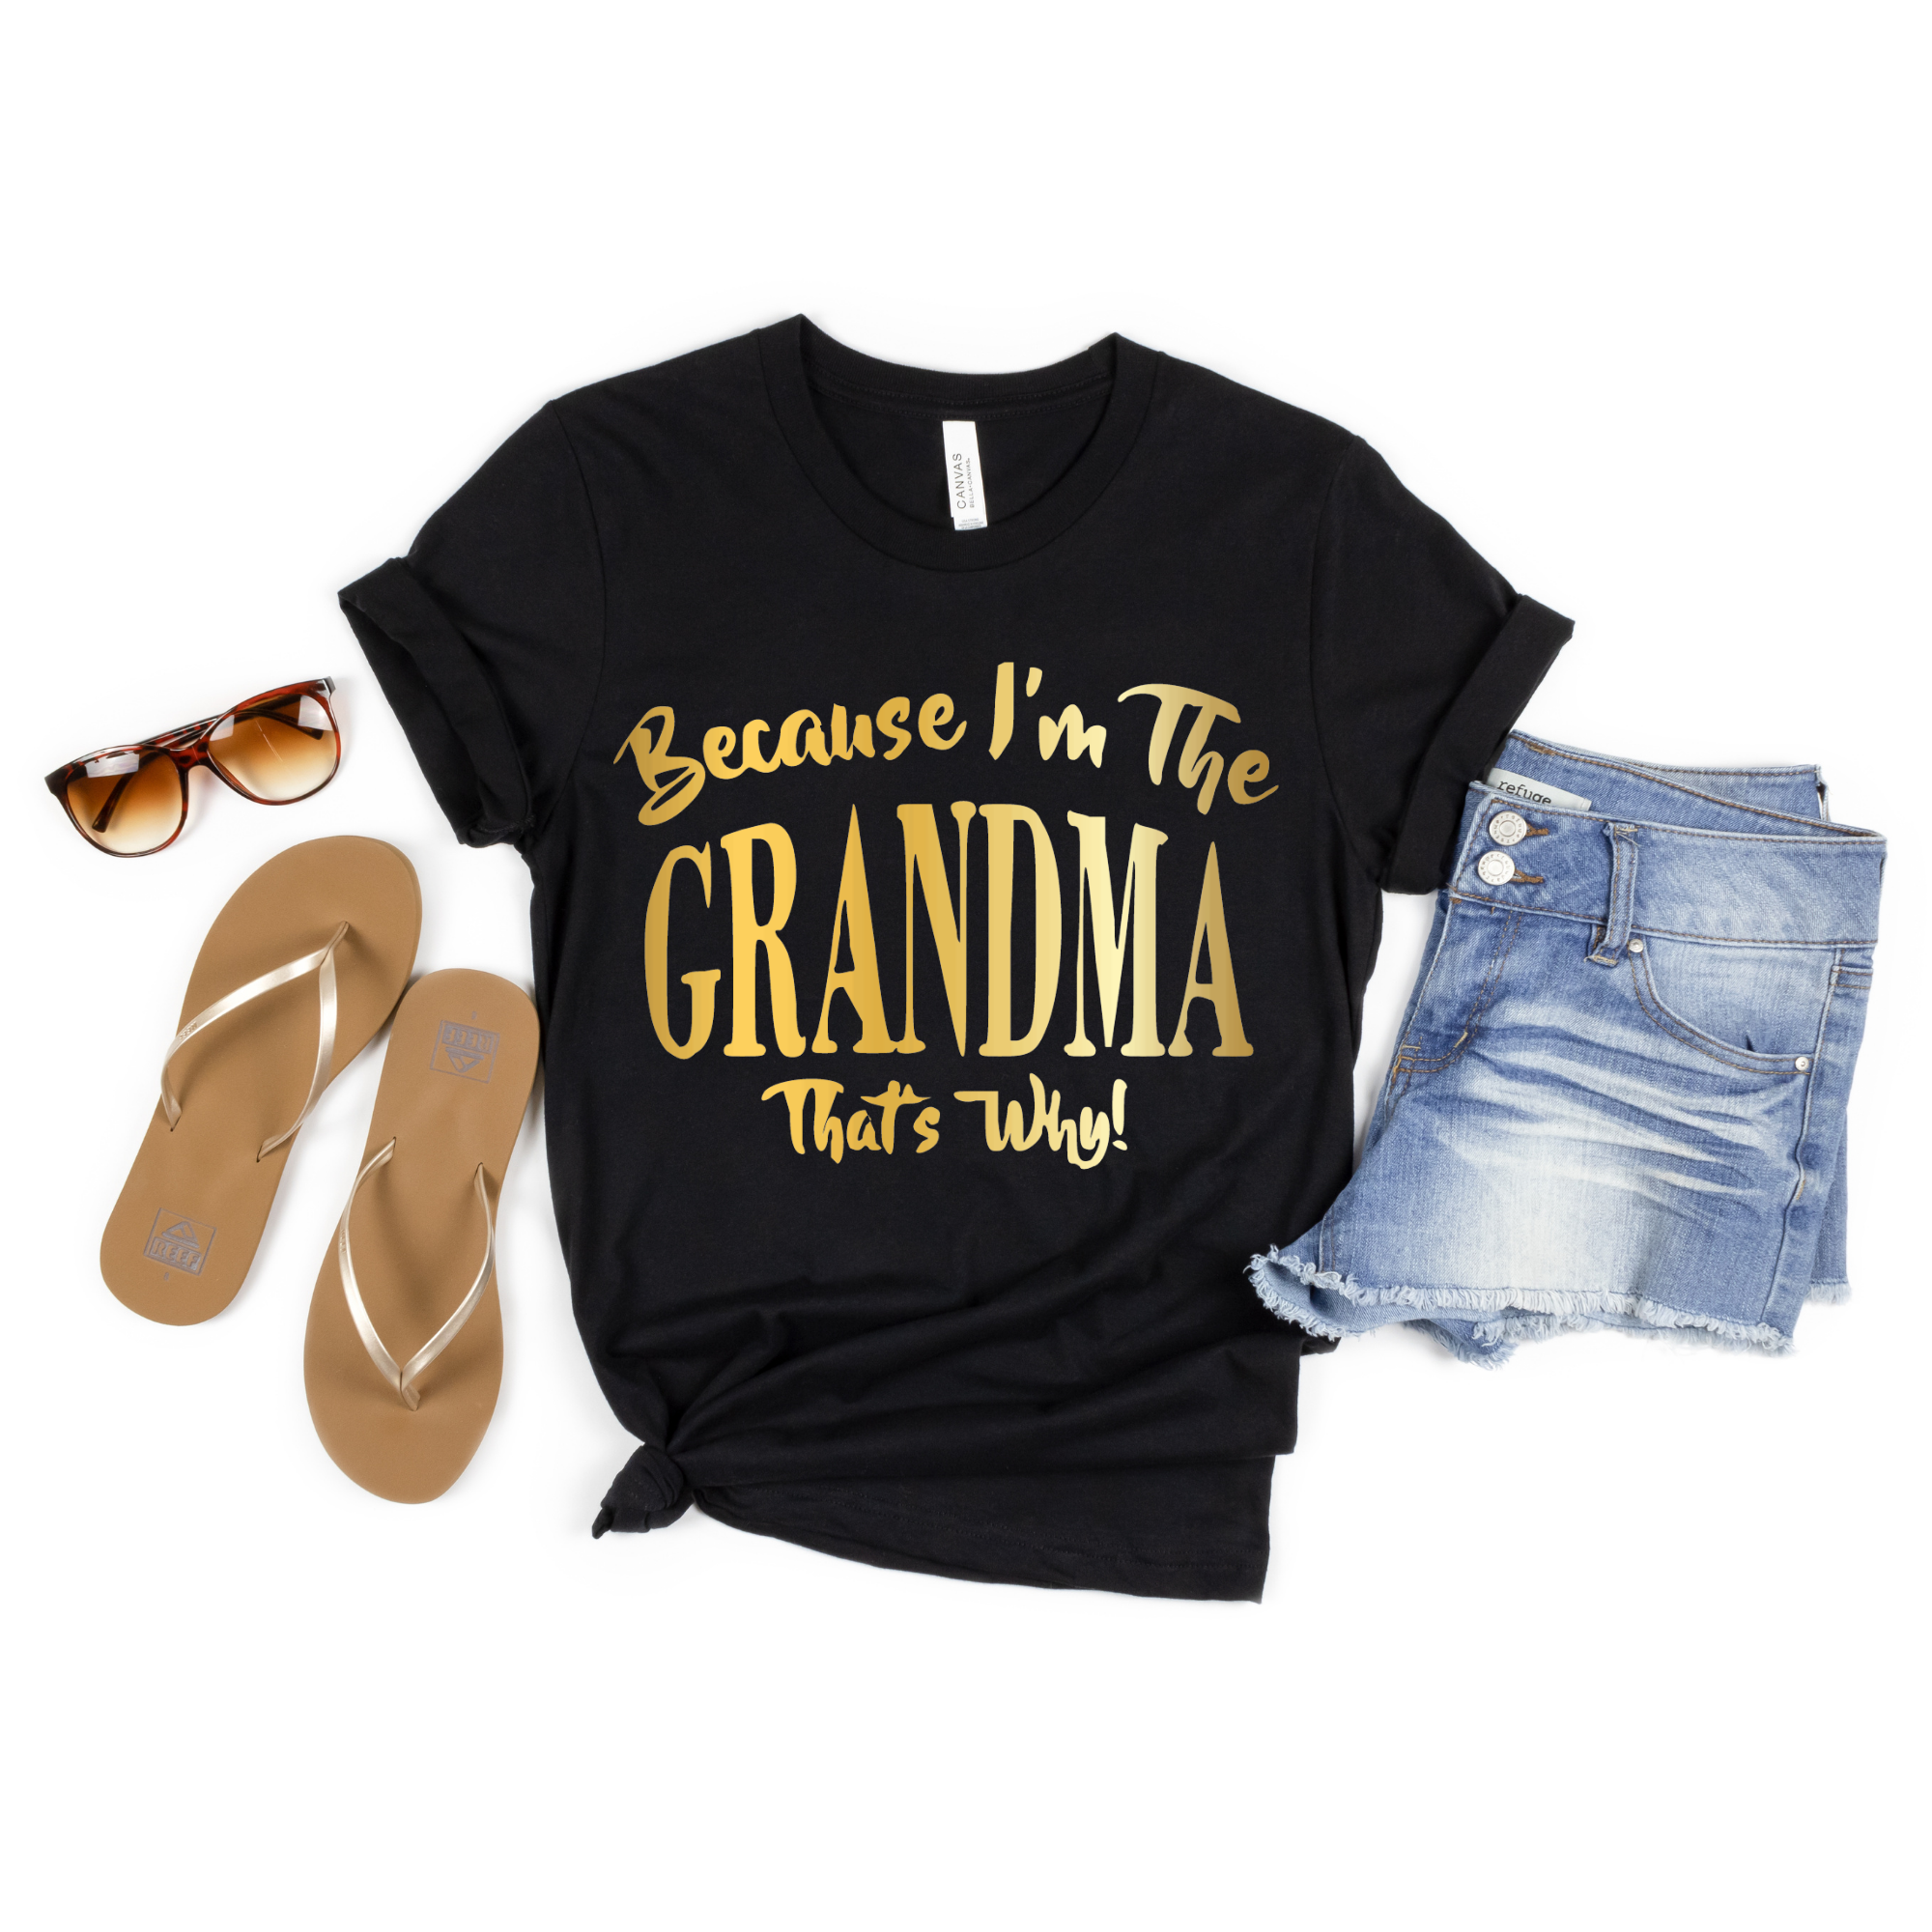 Because I'm the Grandma That's Why Shirt